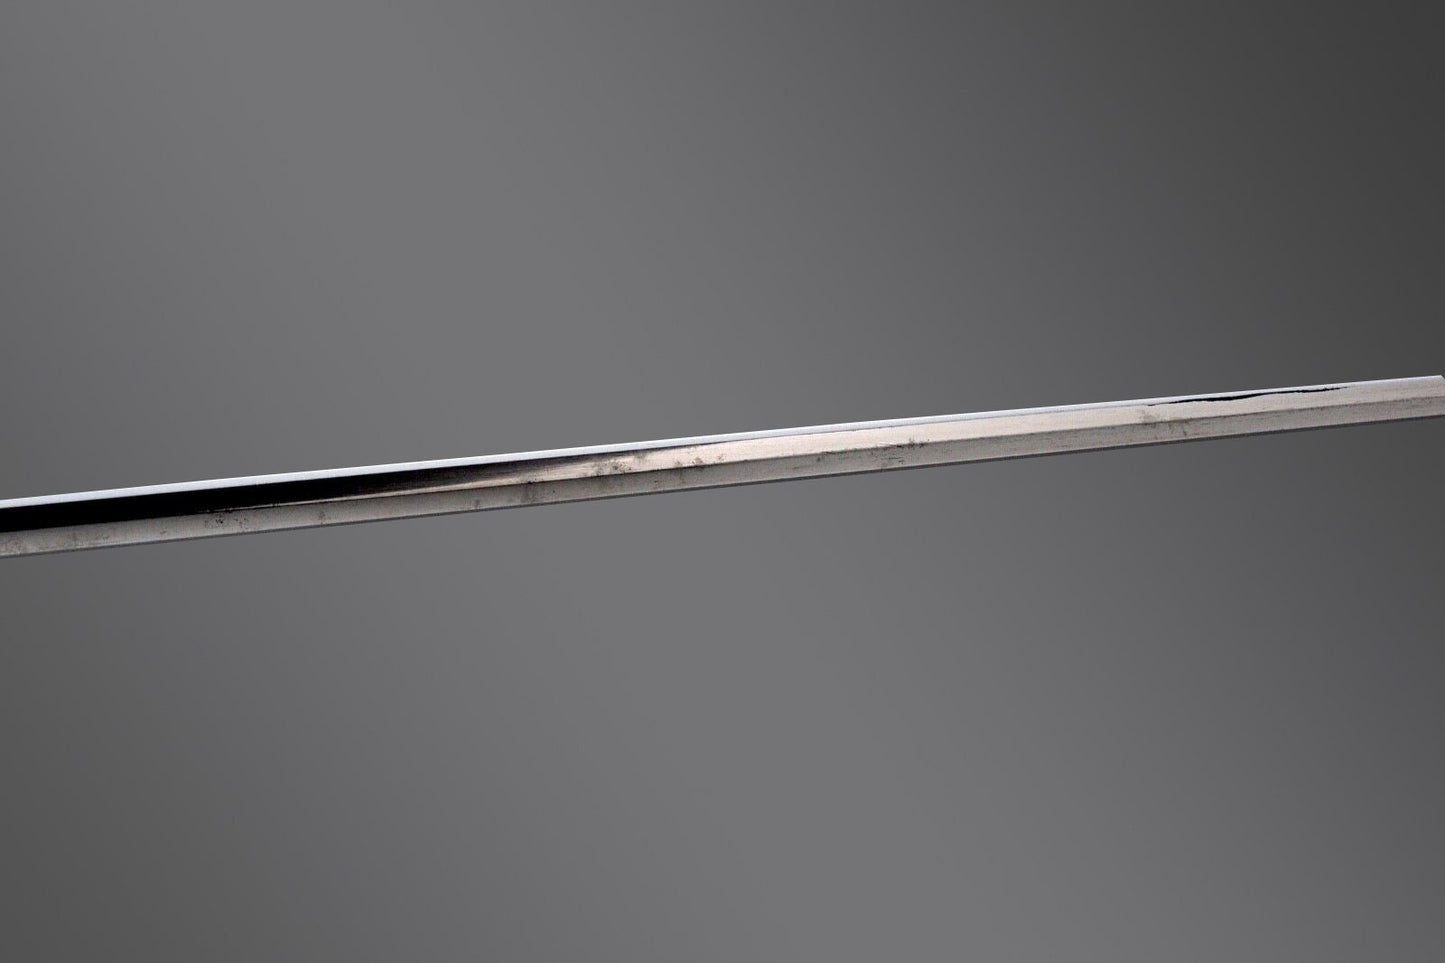 Mumei Mysterious Unique Blade Koshirae Itame-hada Original Asian Weapon Katana Samurai Ancient Period Wakizashi Sword Edo Era.